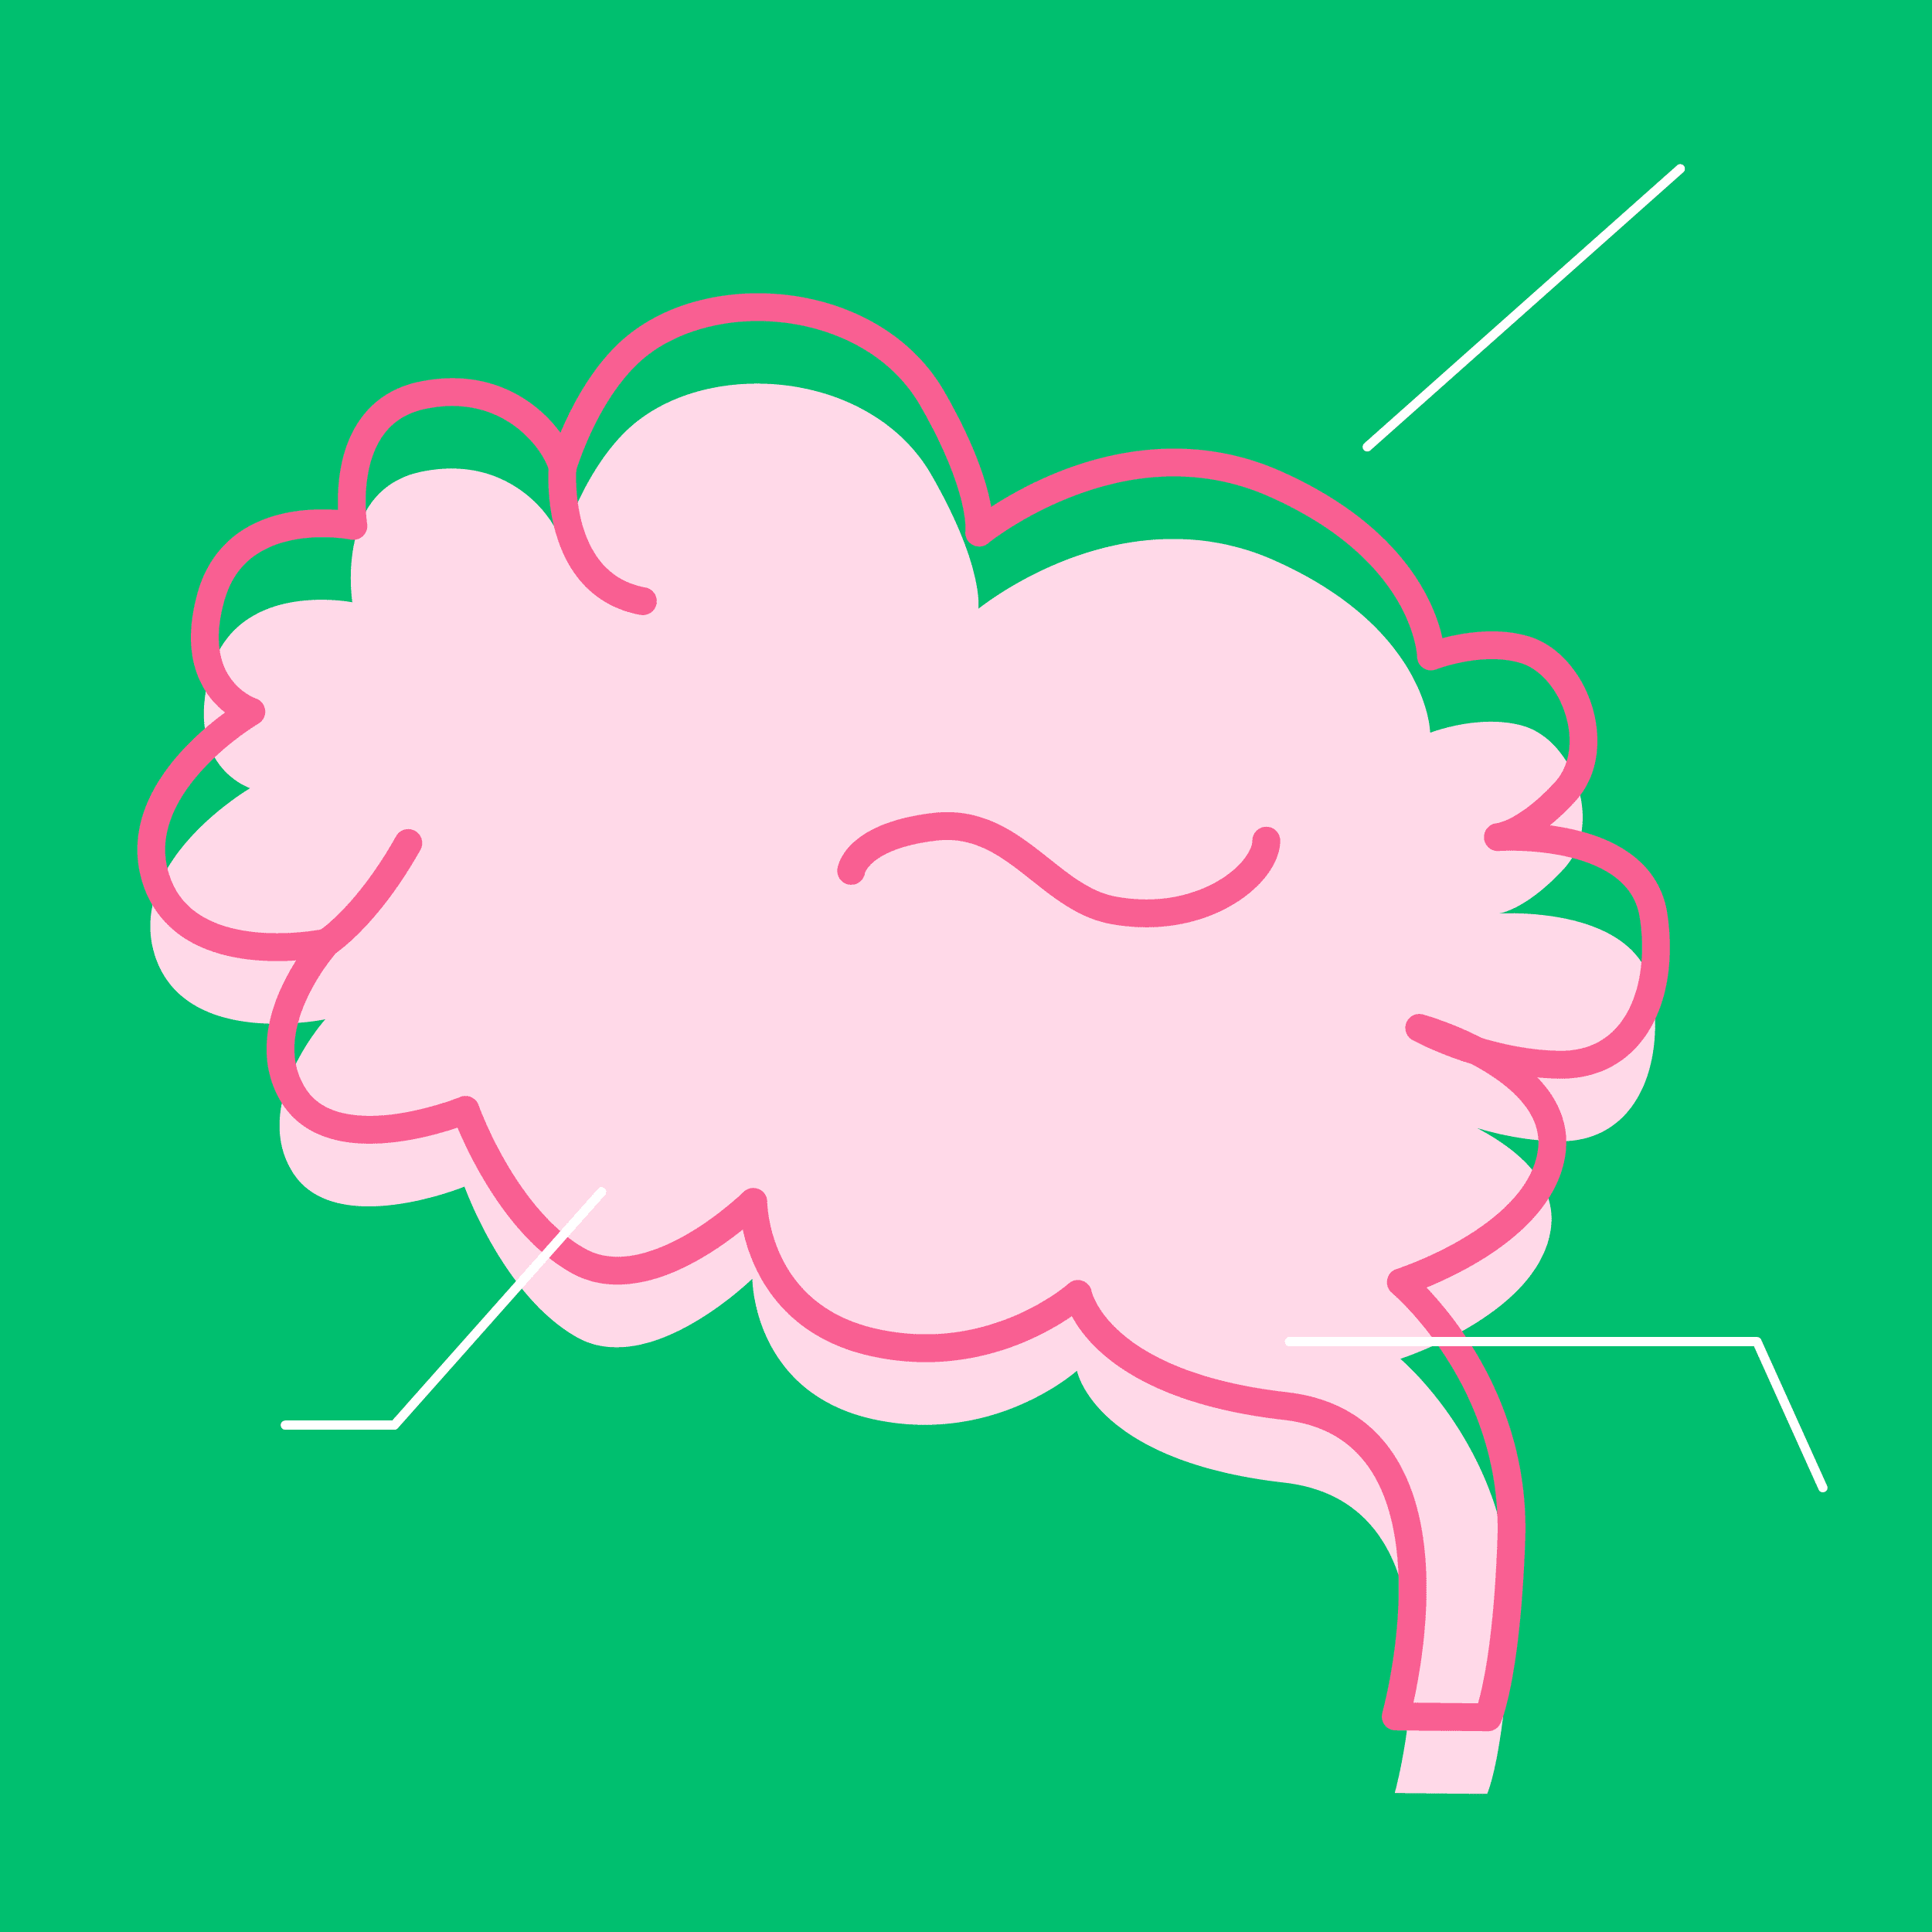 Pink brain icon on green background